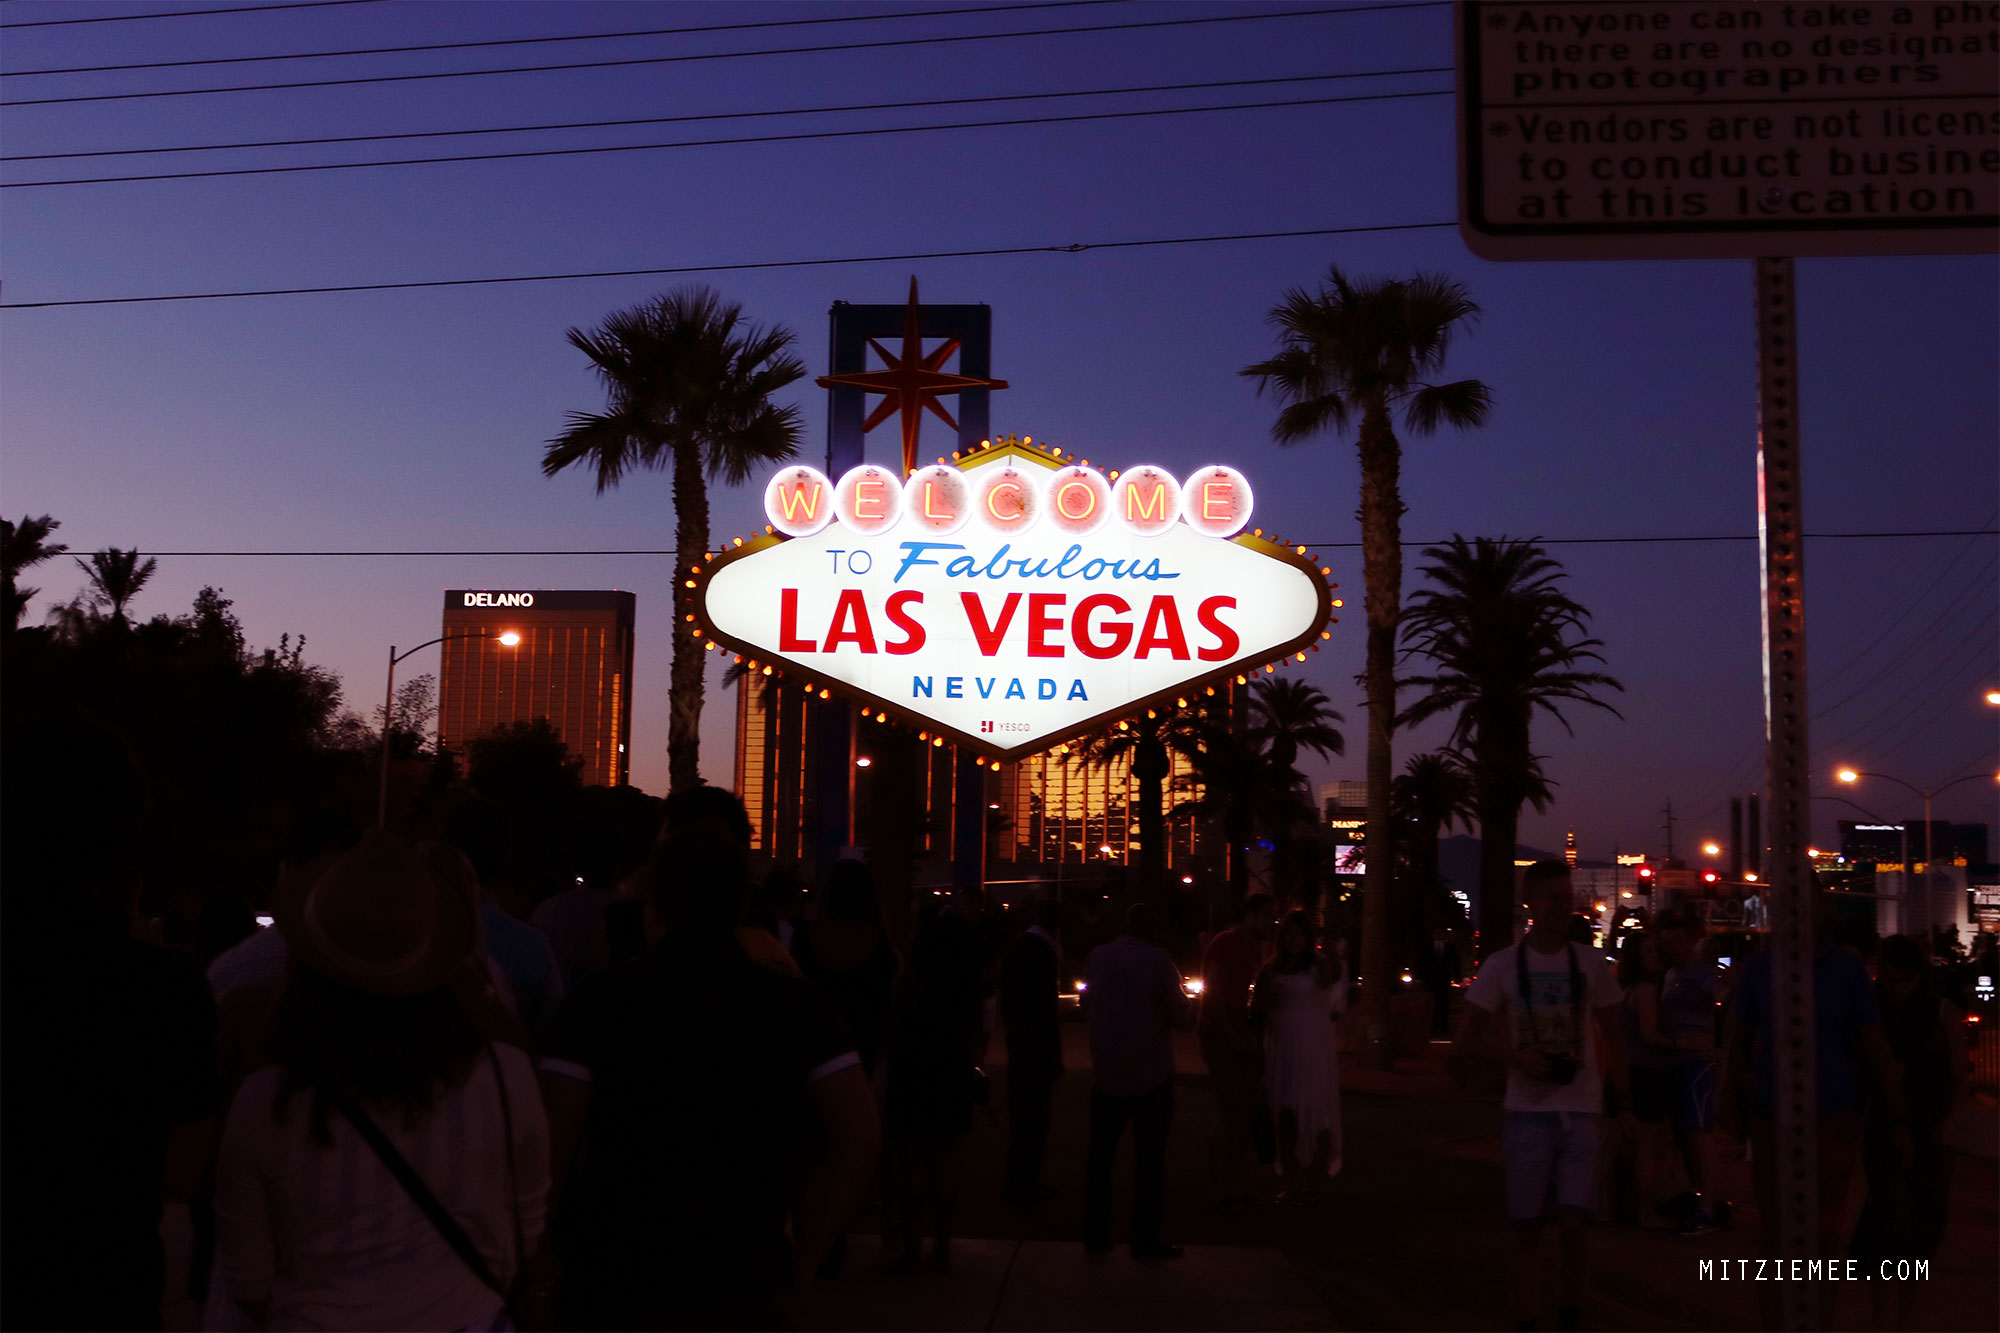 Welcome to Fabulous Las Vegas, the Las Vegas Sign